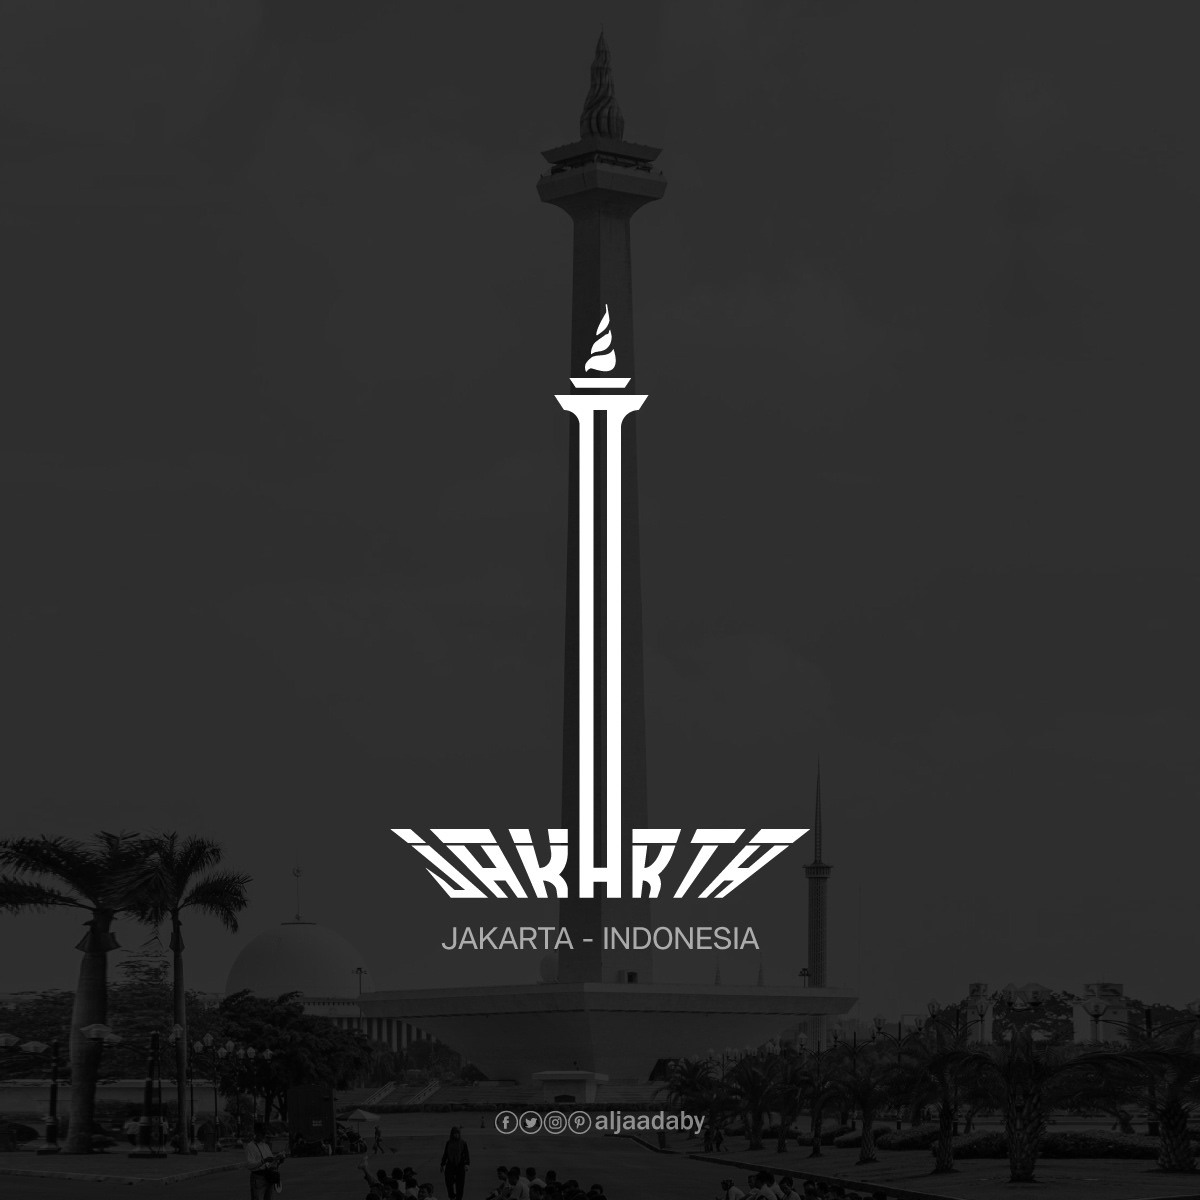 Typographic city logos based on their famous landmarks - Jakarta